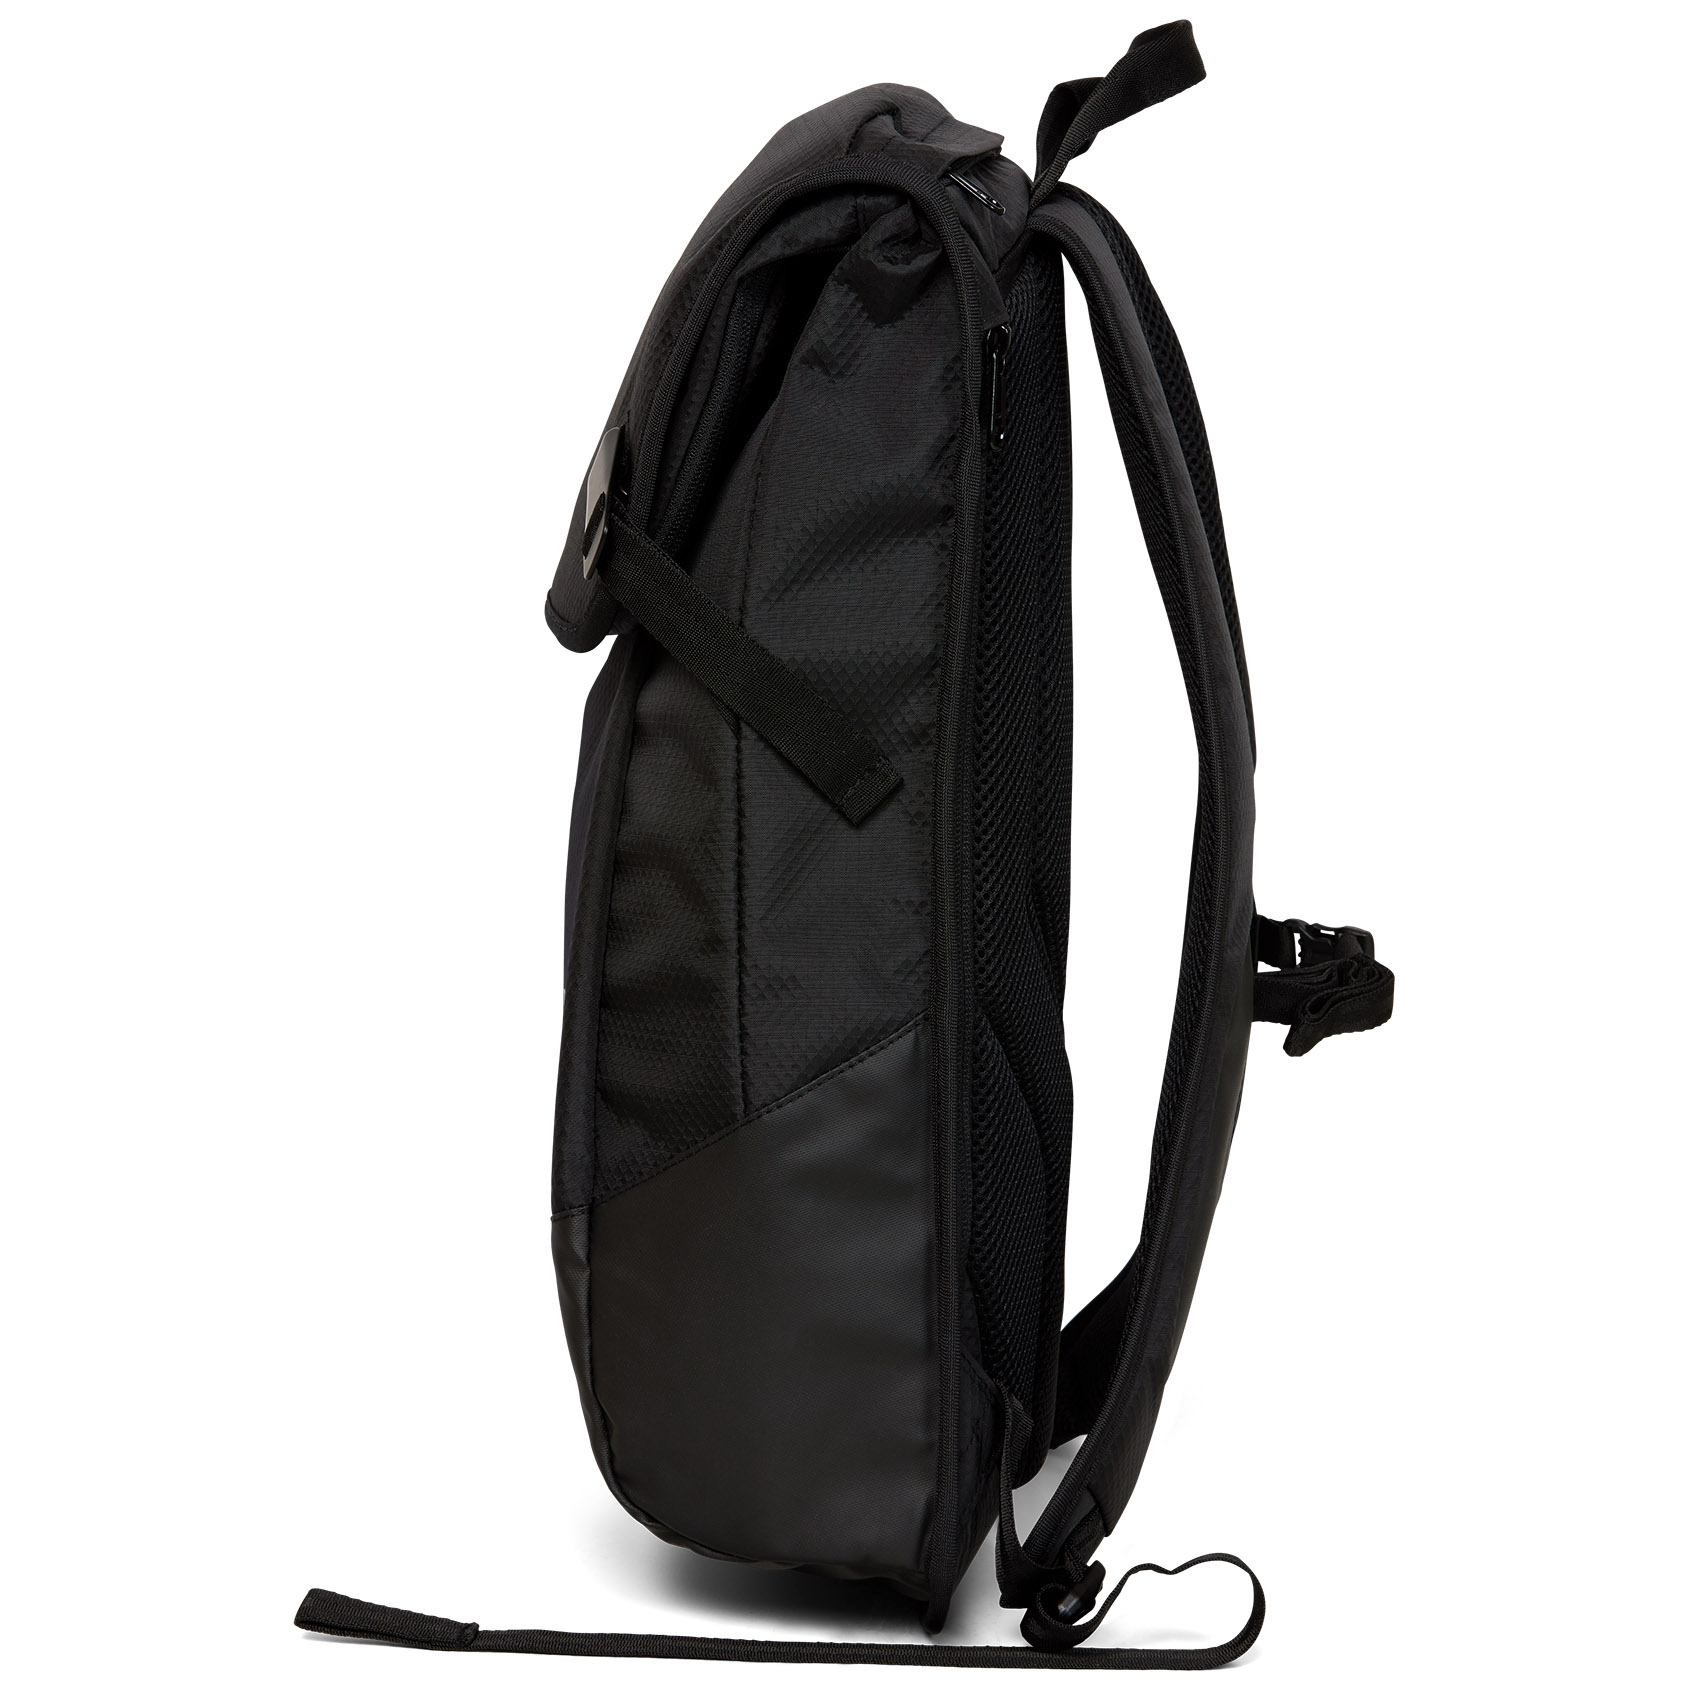 Aevor Rucksack Daypack (proof black)